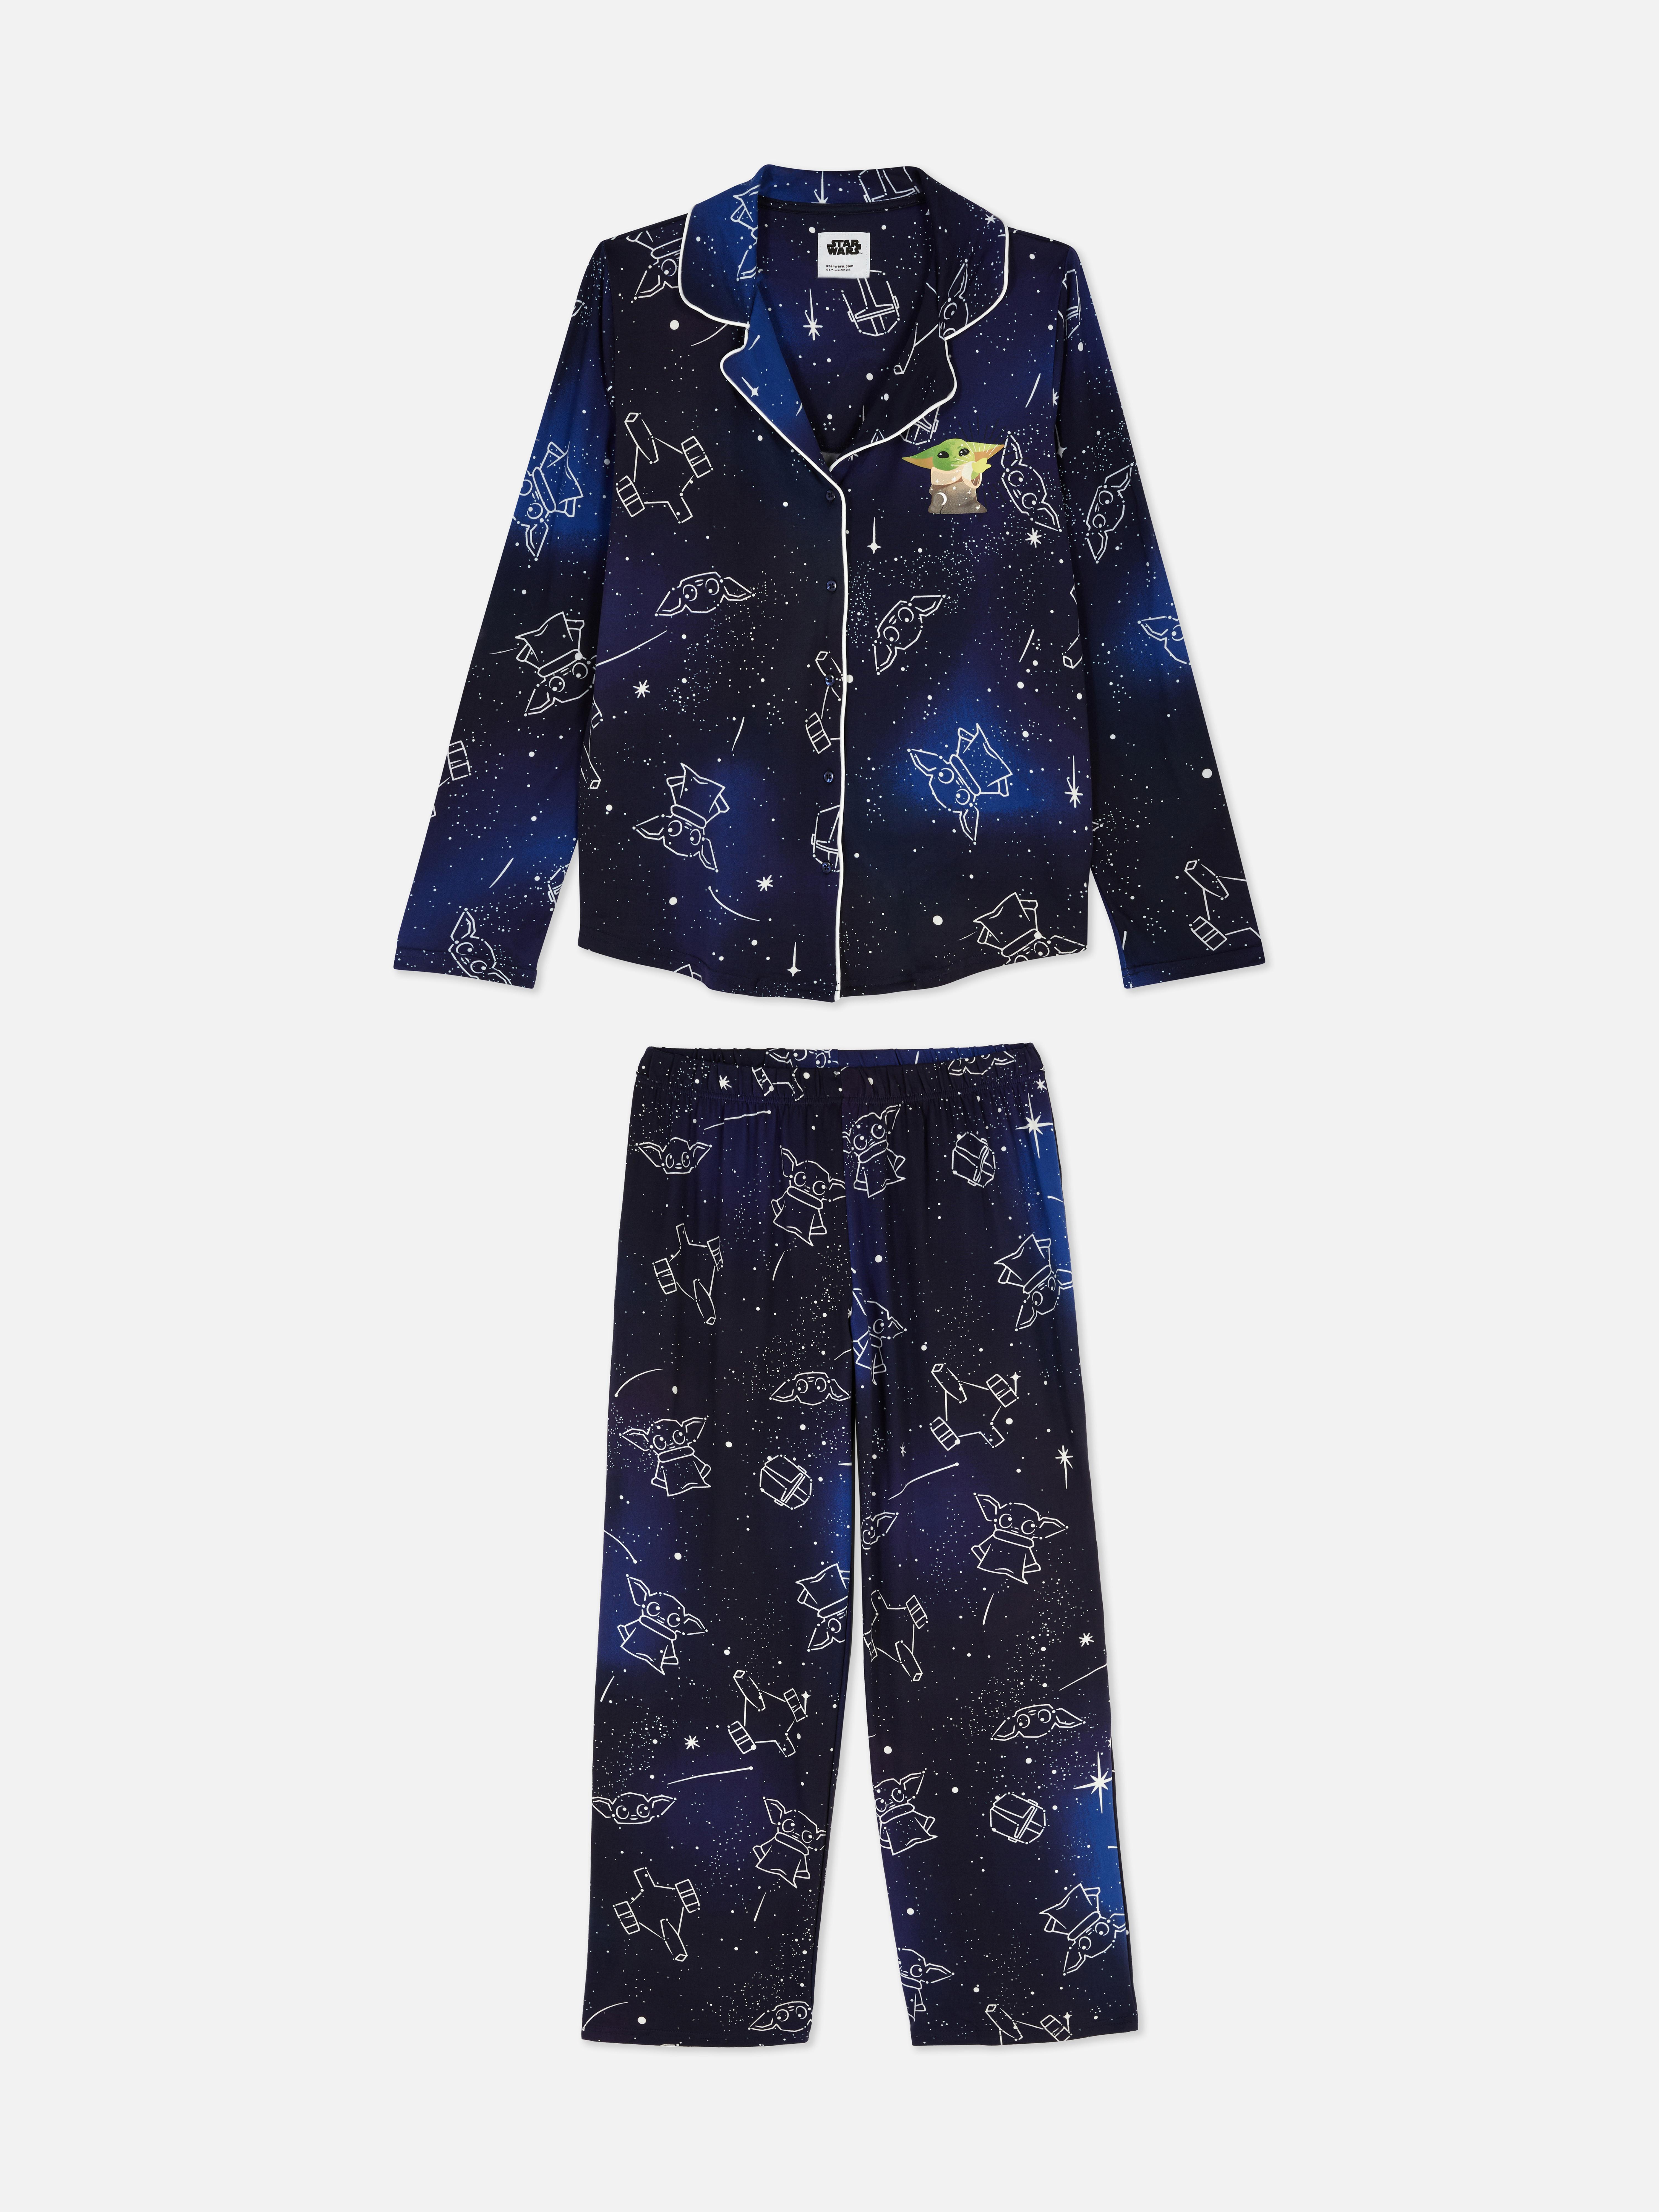 Women's Pyjama Sets, Fleece, Long Sleeve & Themed PJ Sets